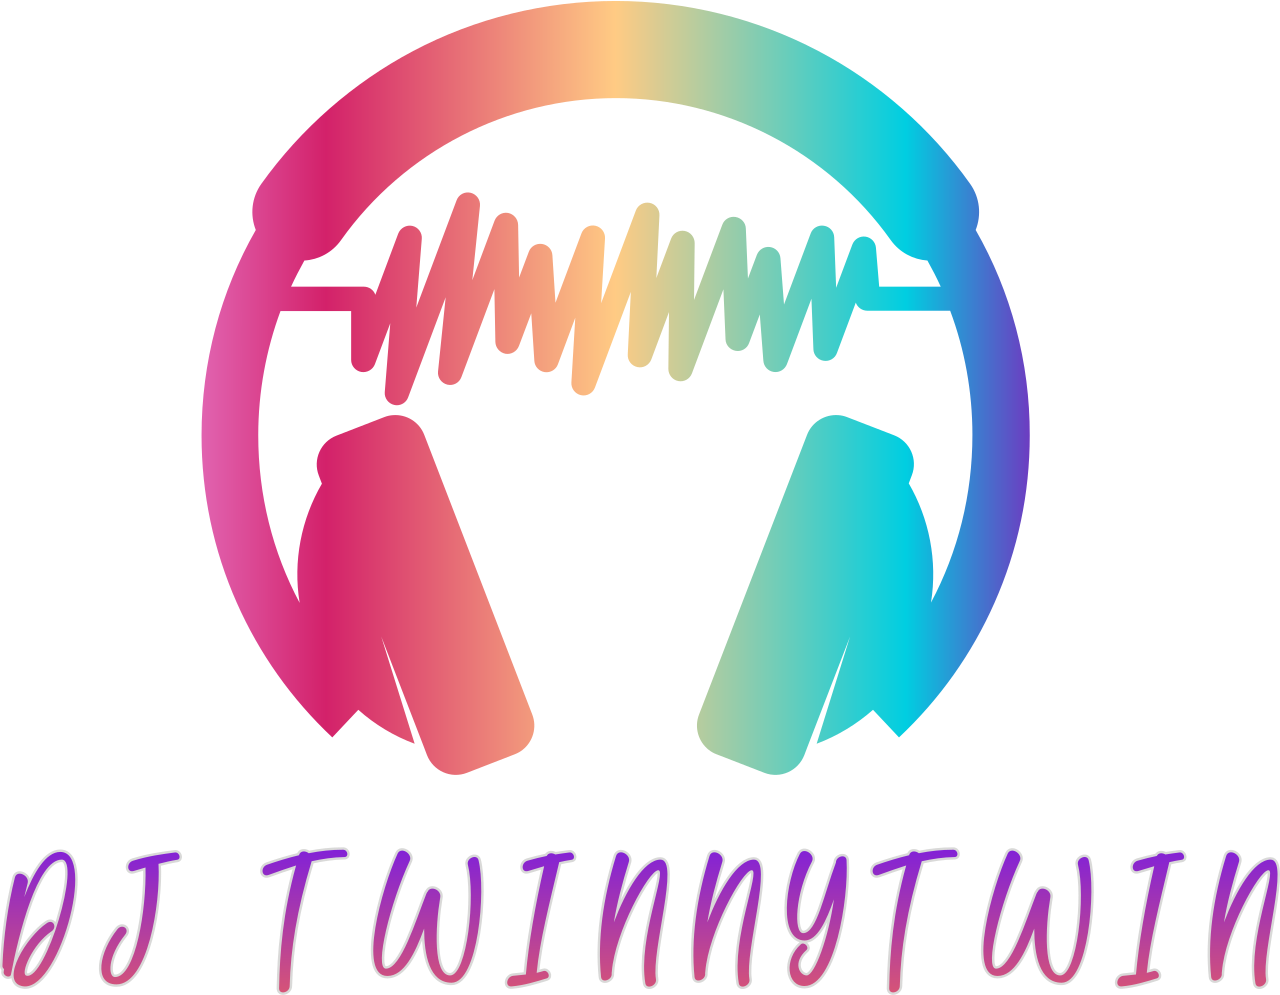 Dj TwinnyTwin's logo